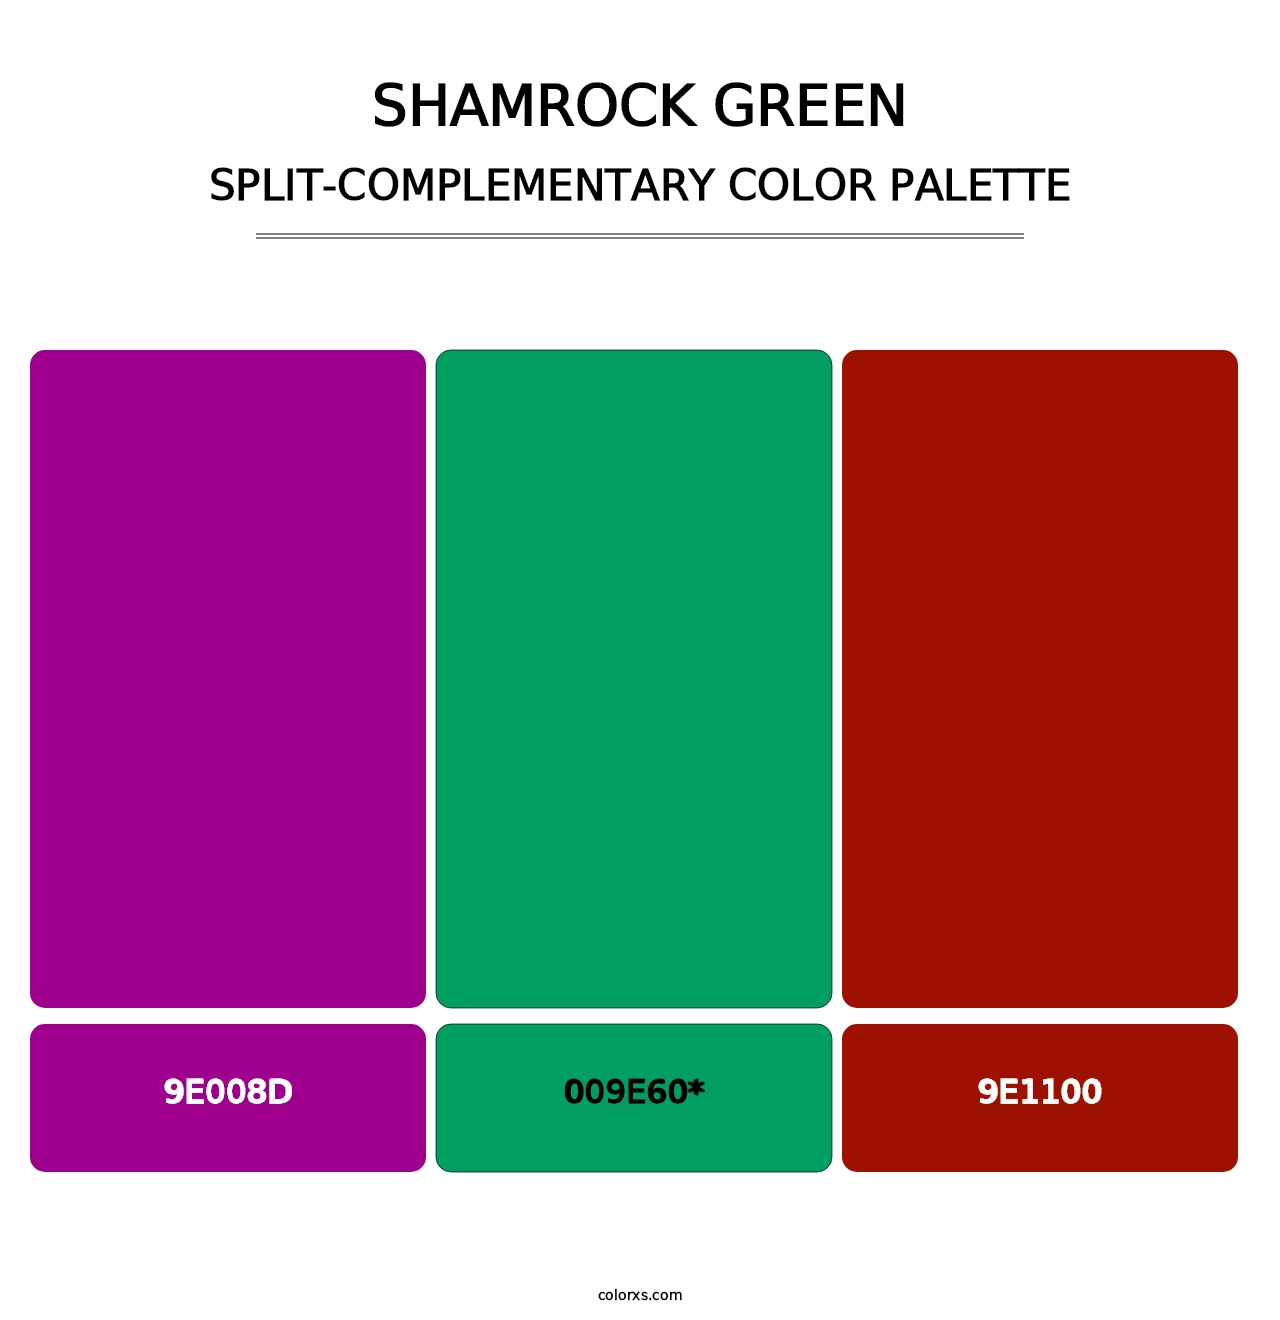 Shamrock Green - Split-Complementary Color Palette